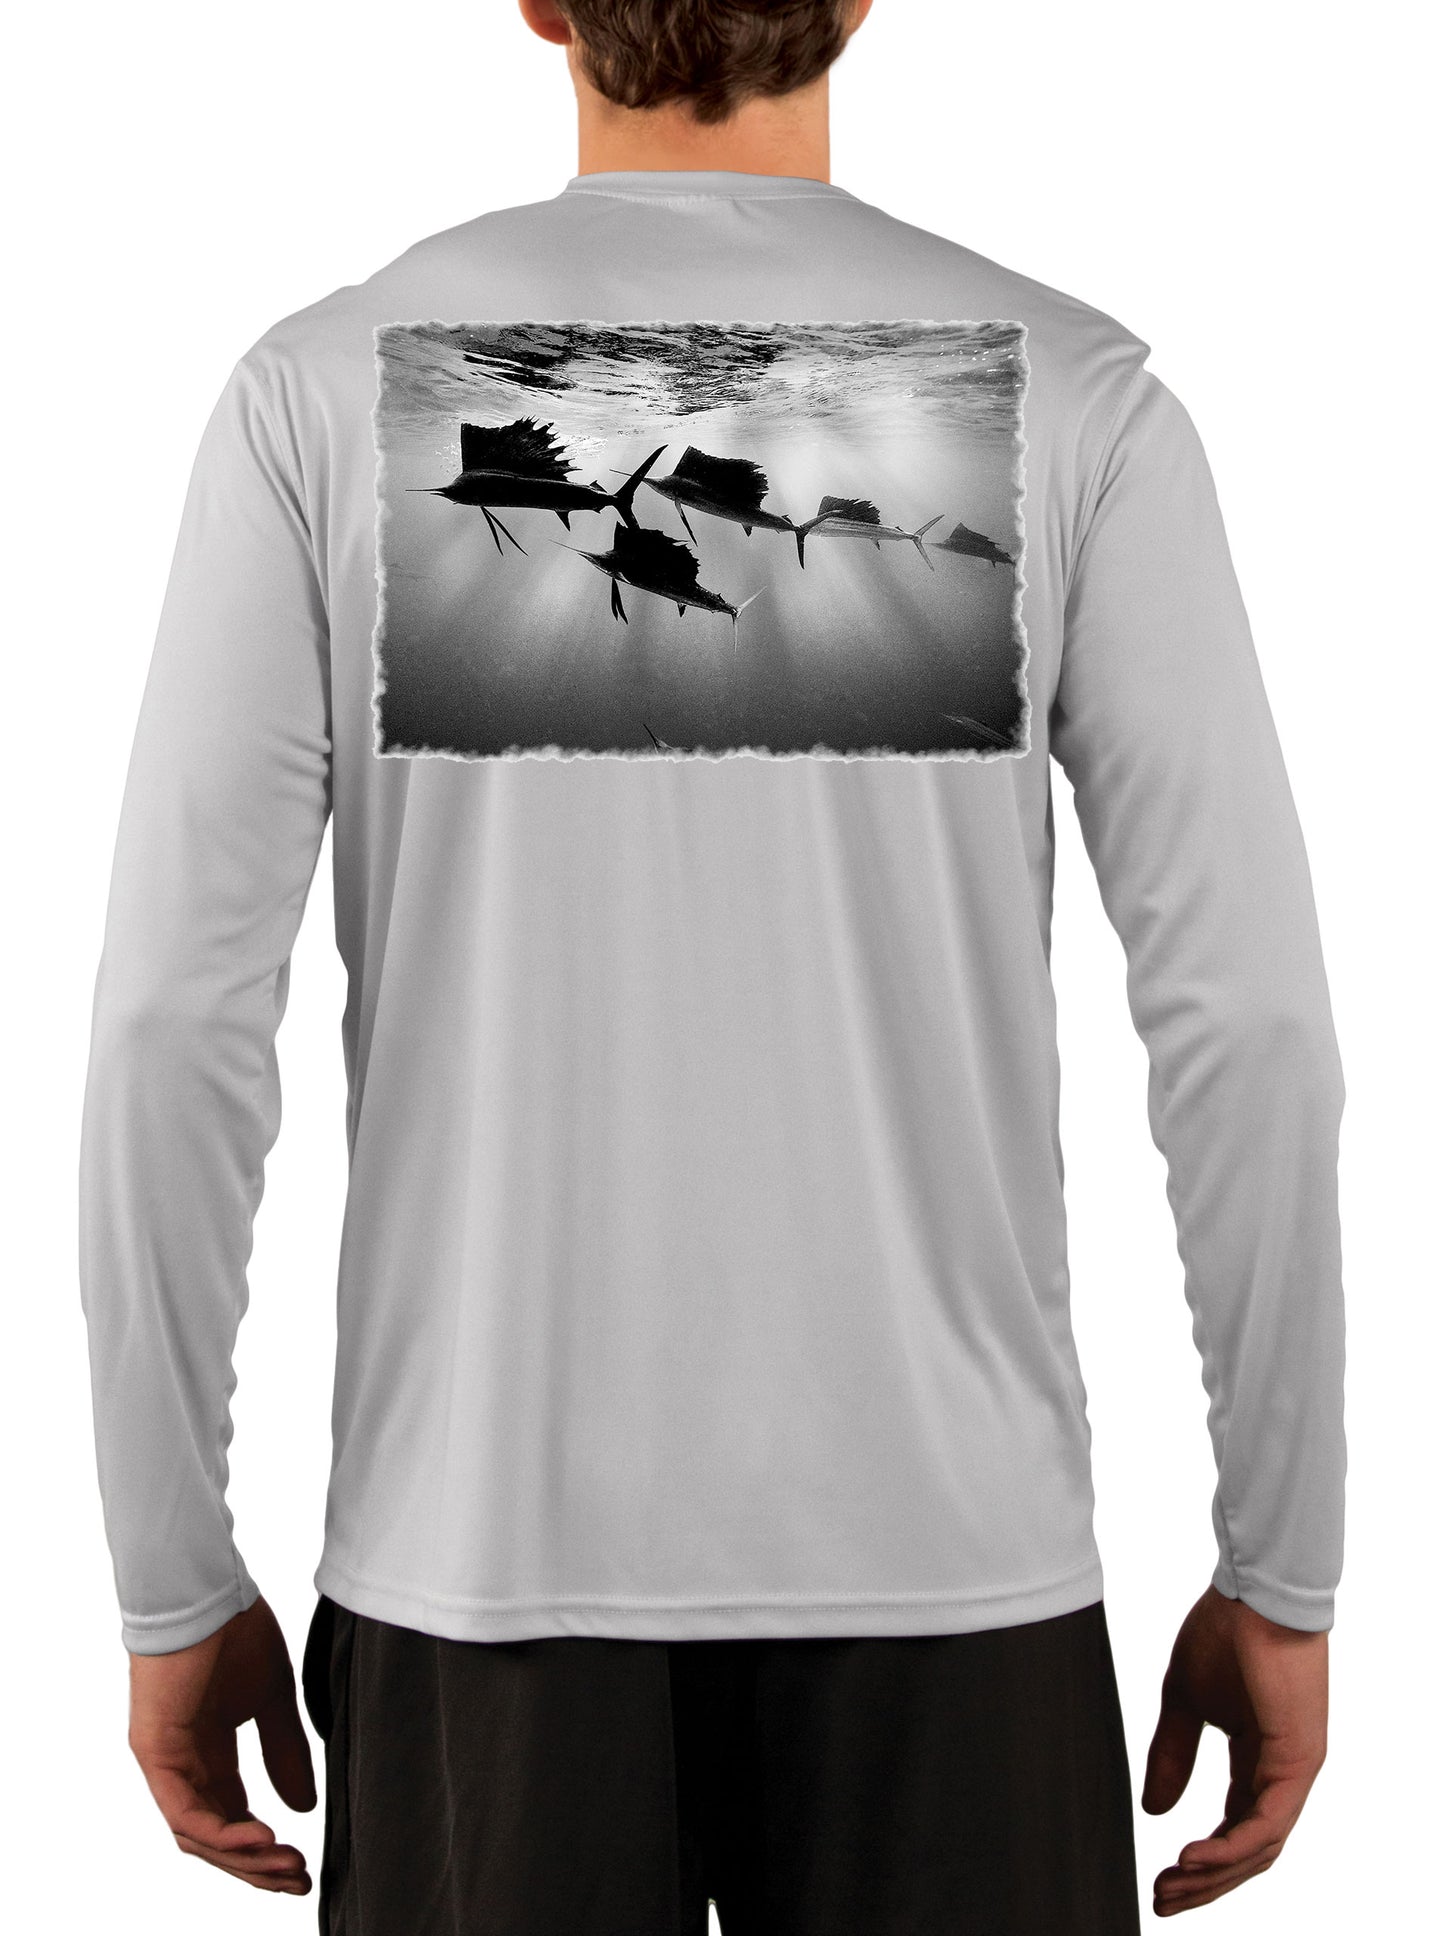 Pat Ford Sailfish Vignette Fishing Shirt - Skiff Life